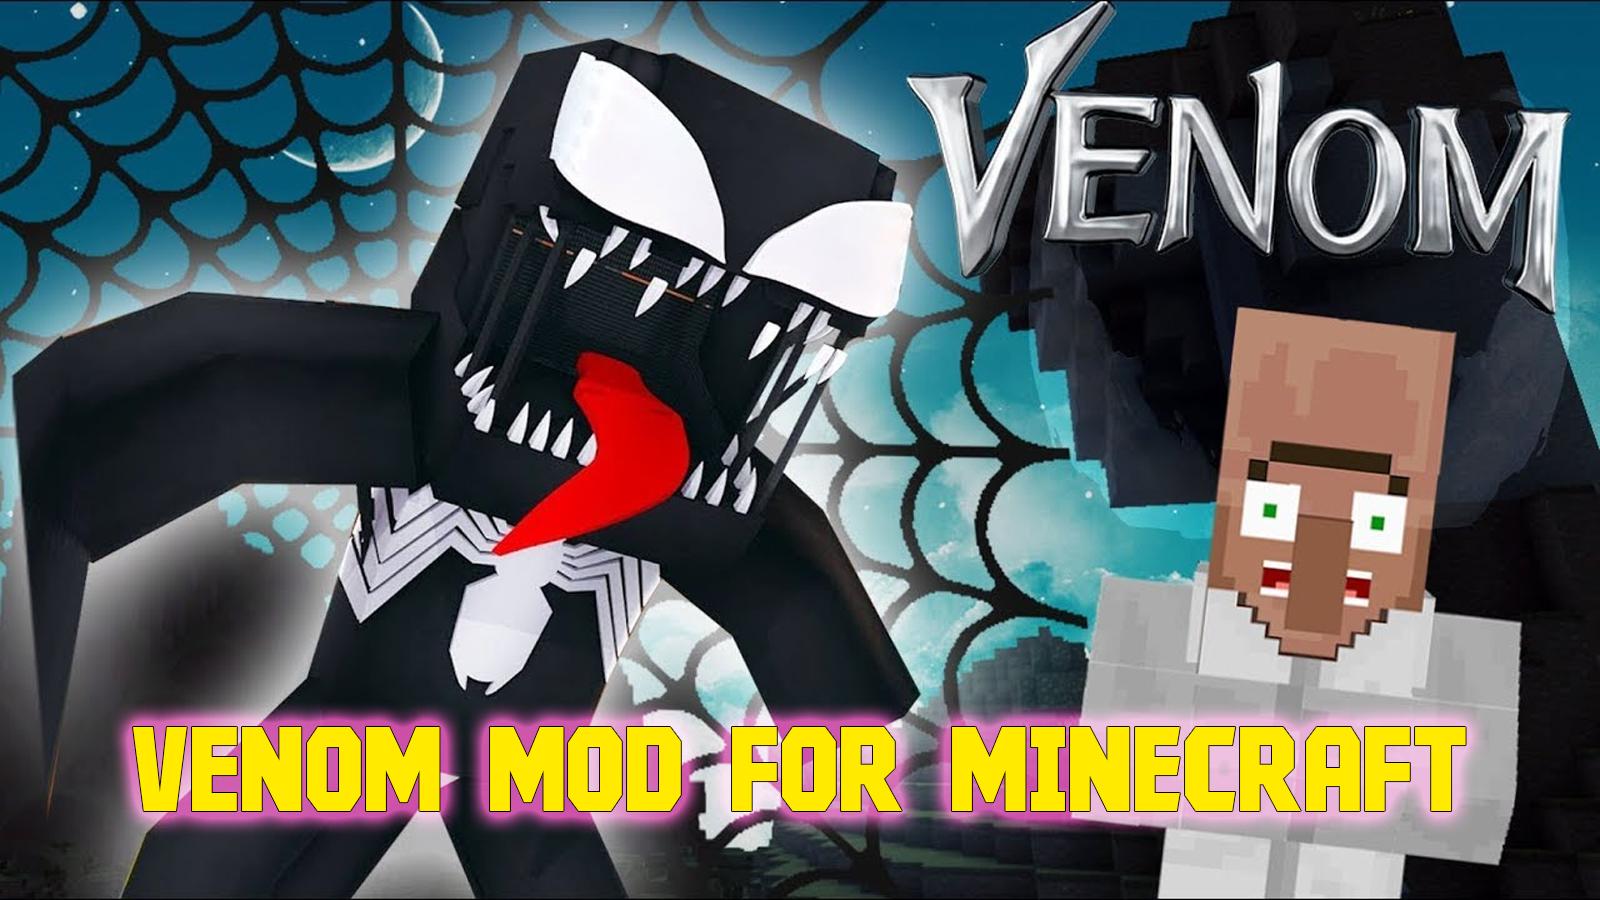 Venom mod minecraft download play store for pc app